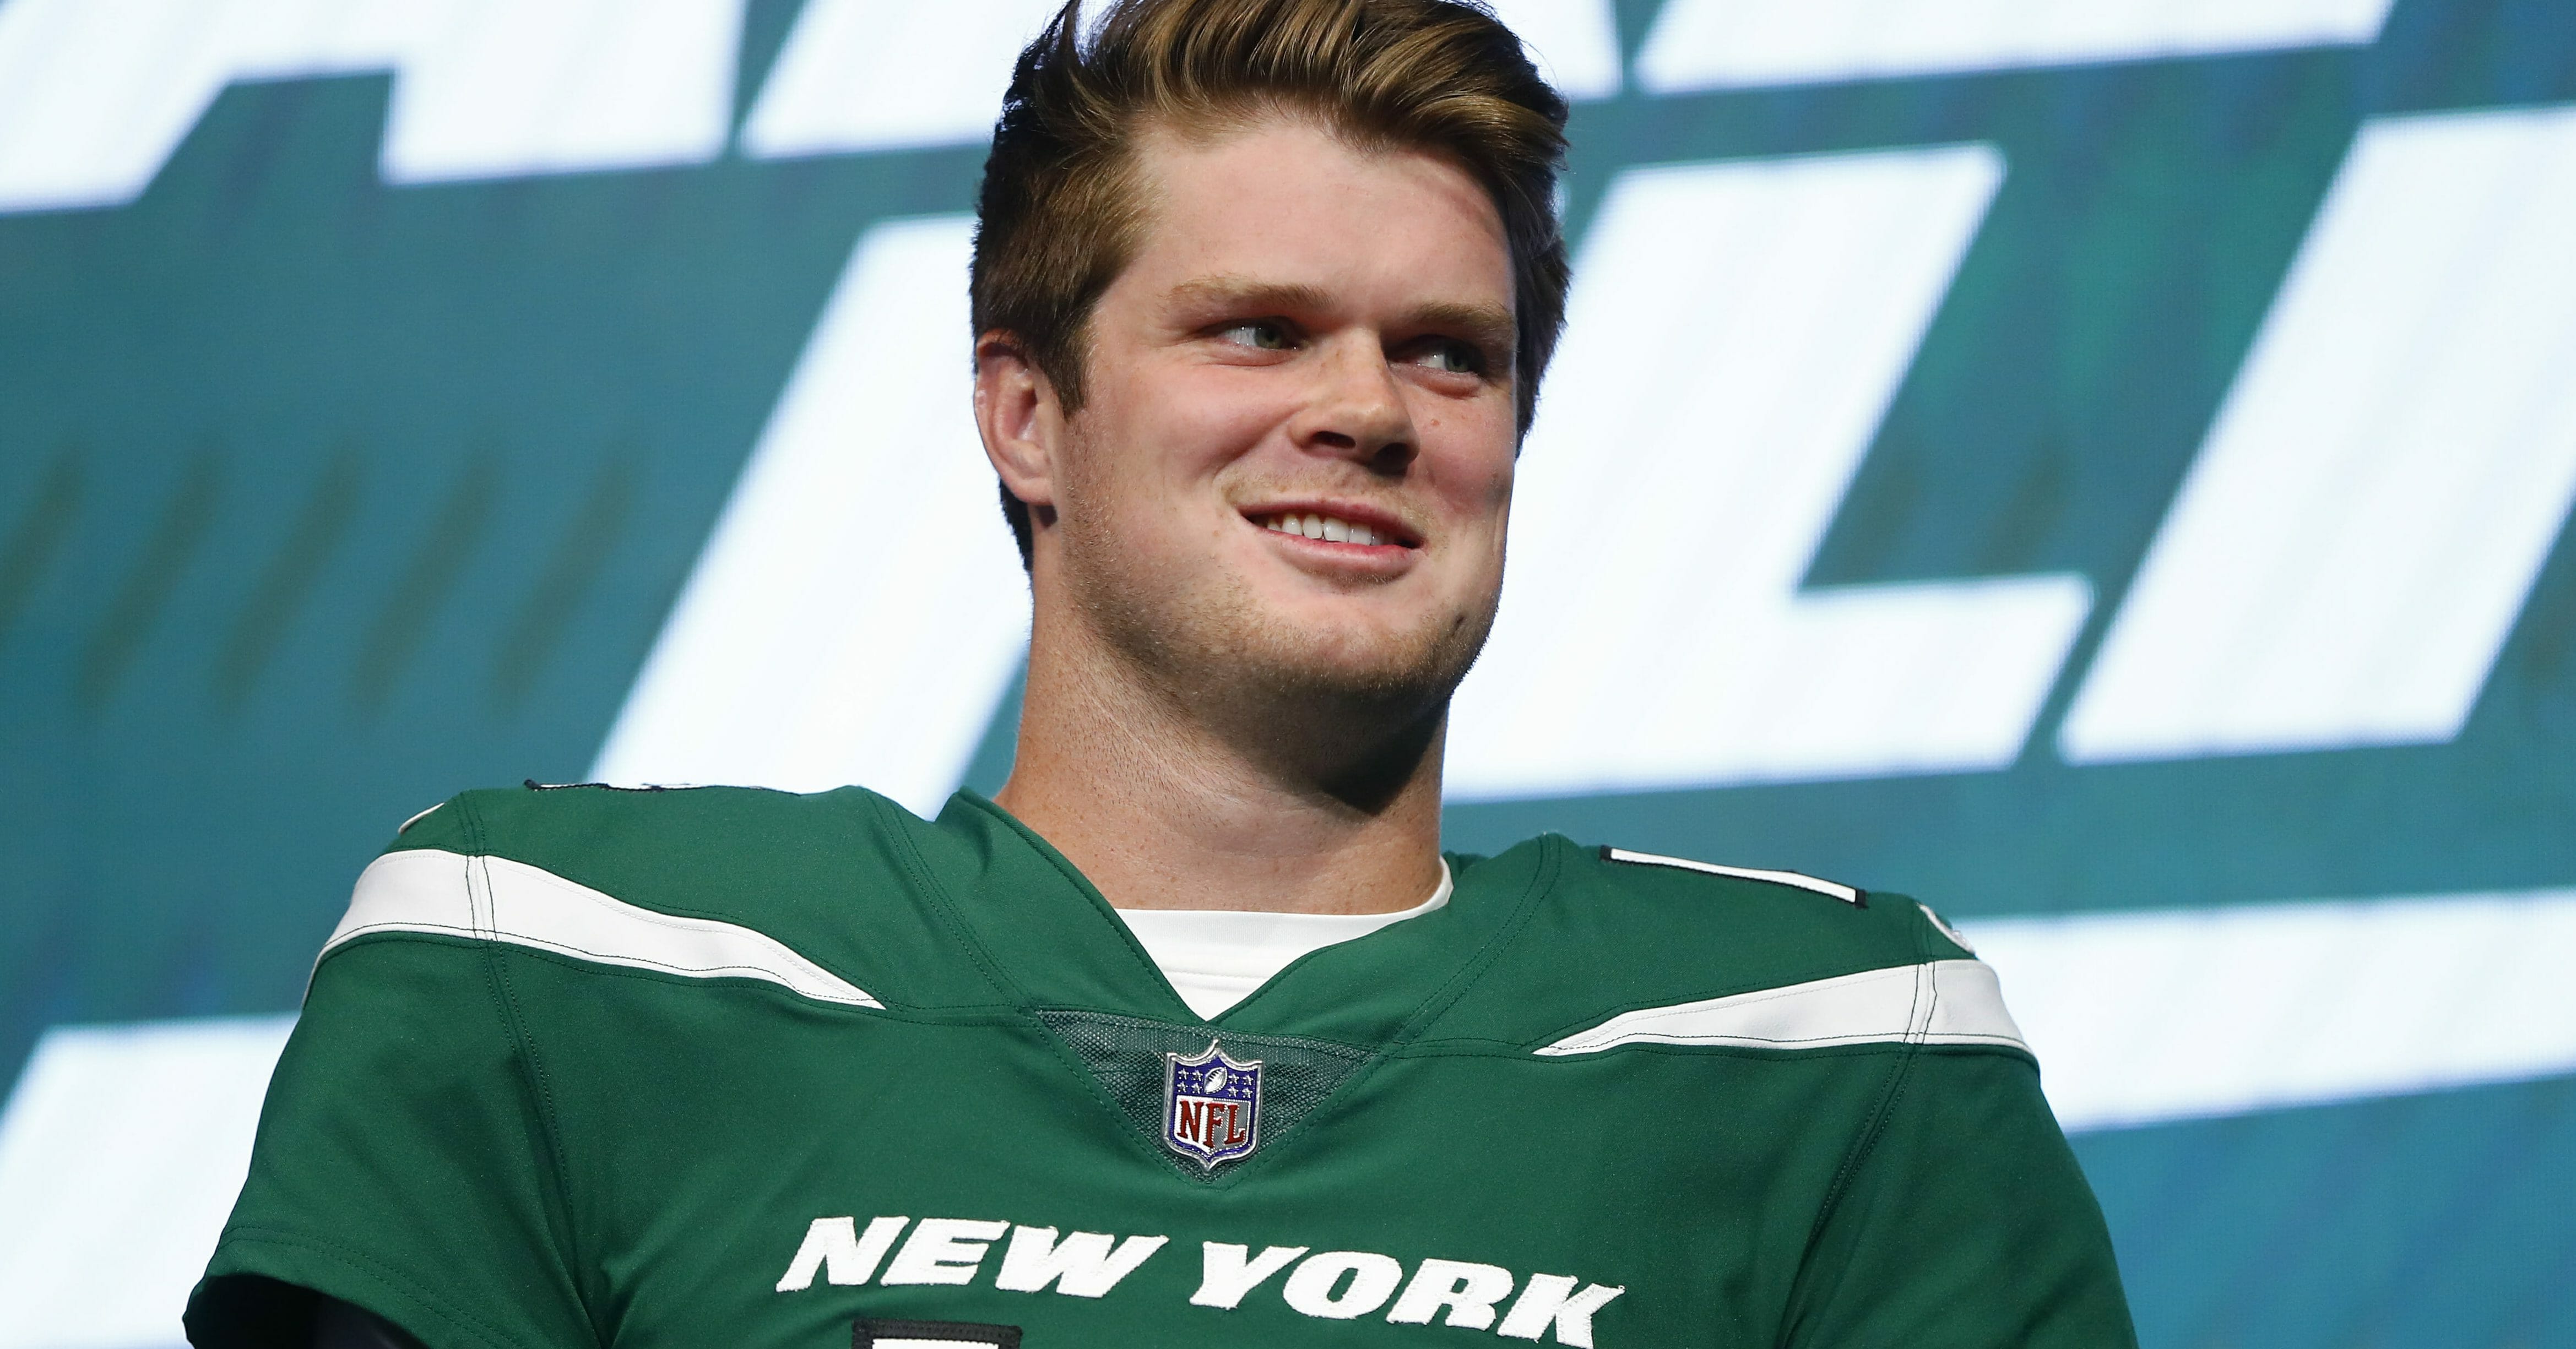 New York Jets quarterback Sam Darnold models the team's new "Gotham green" uniform April 4, 2019, in New York.